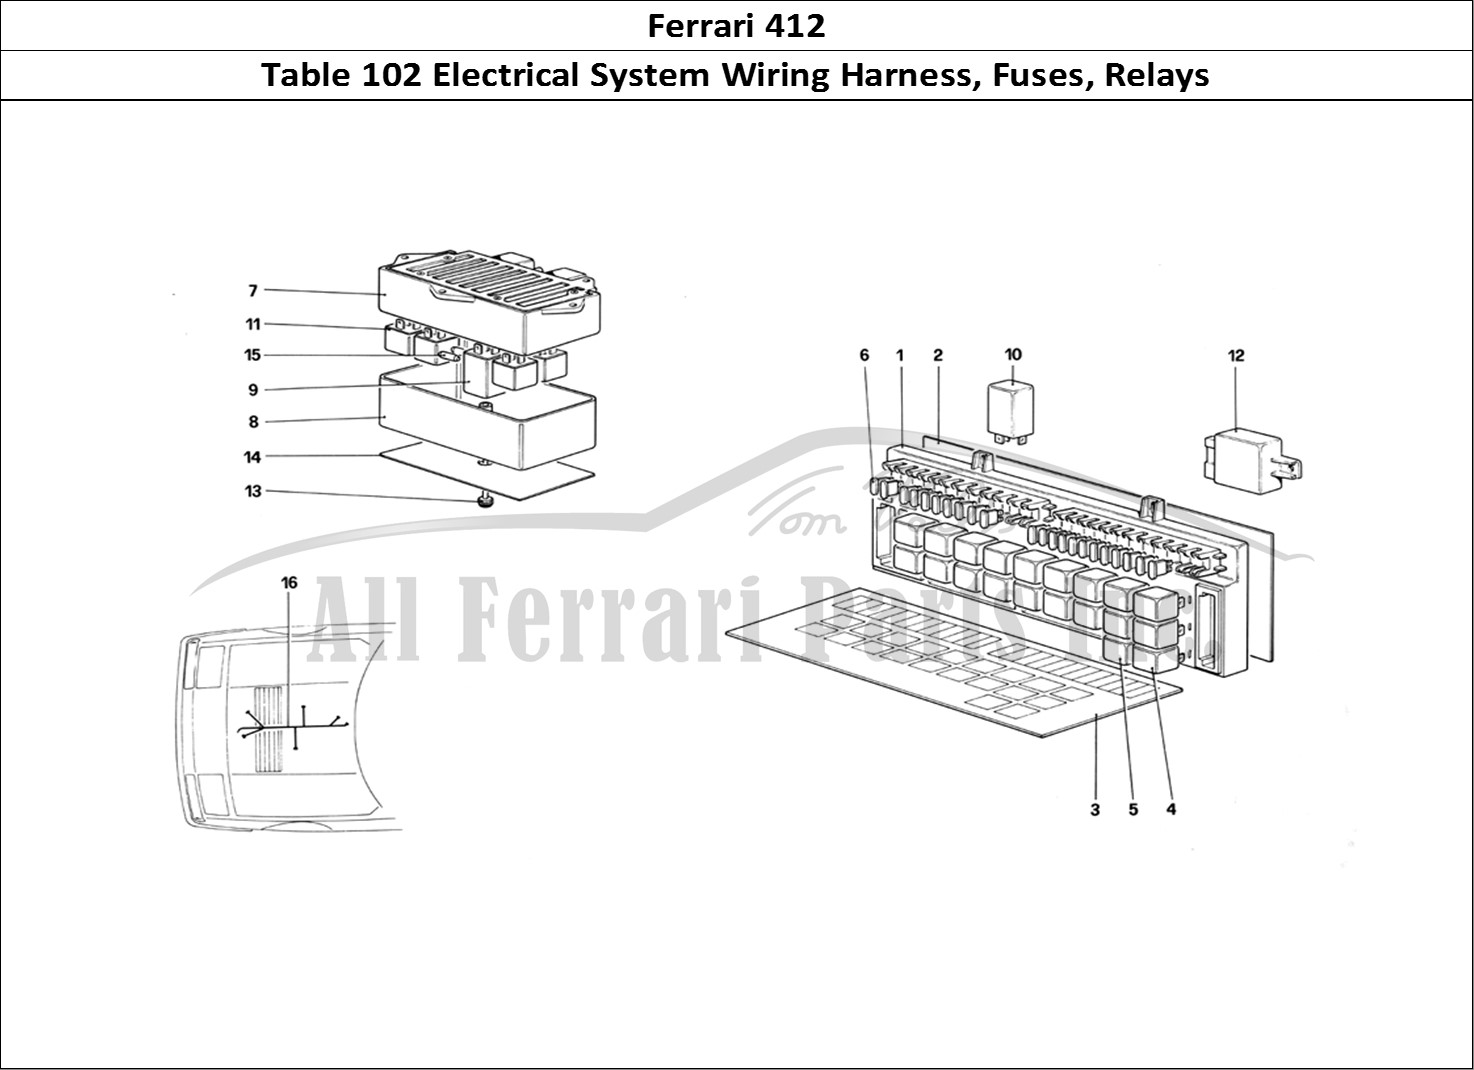 Ferrari Parts Ferrari 412 (Mechanical) Page 102 Electrical System, Fuses